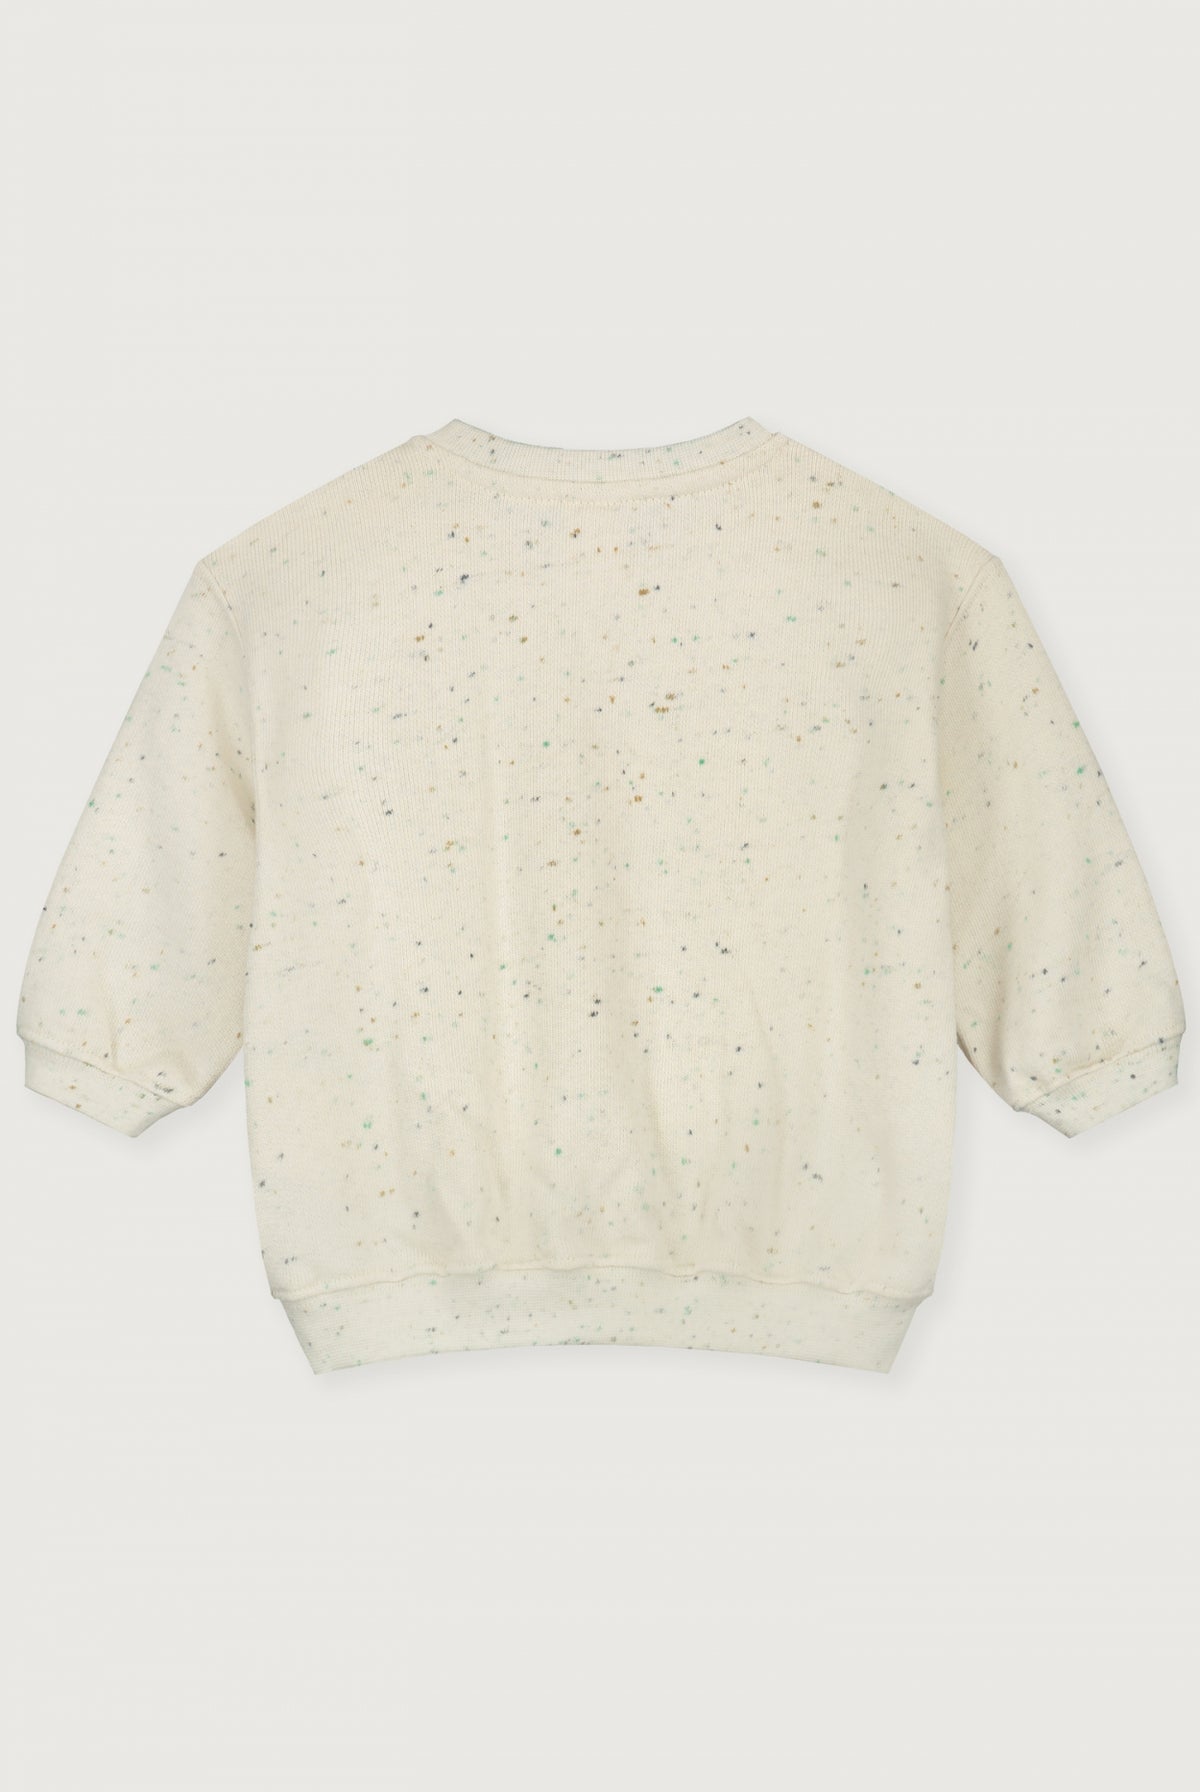 Baby Dropped Shoulder Sweater | Sprinkles